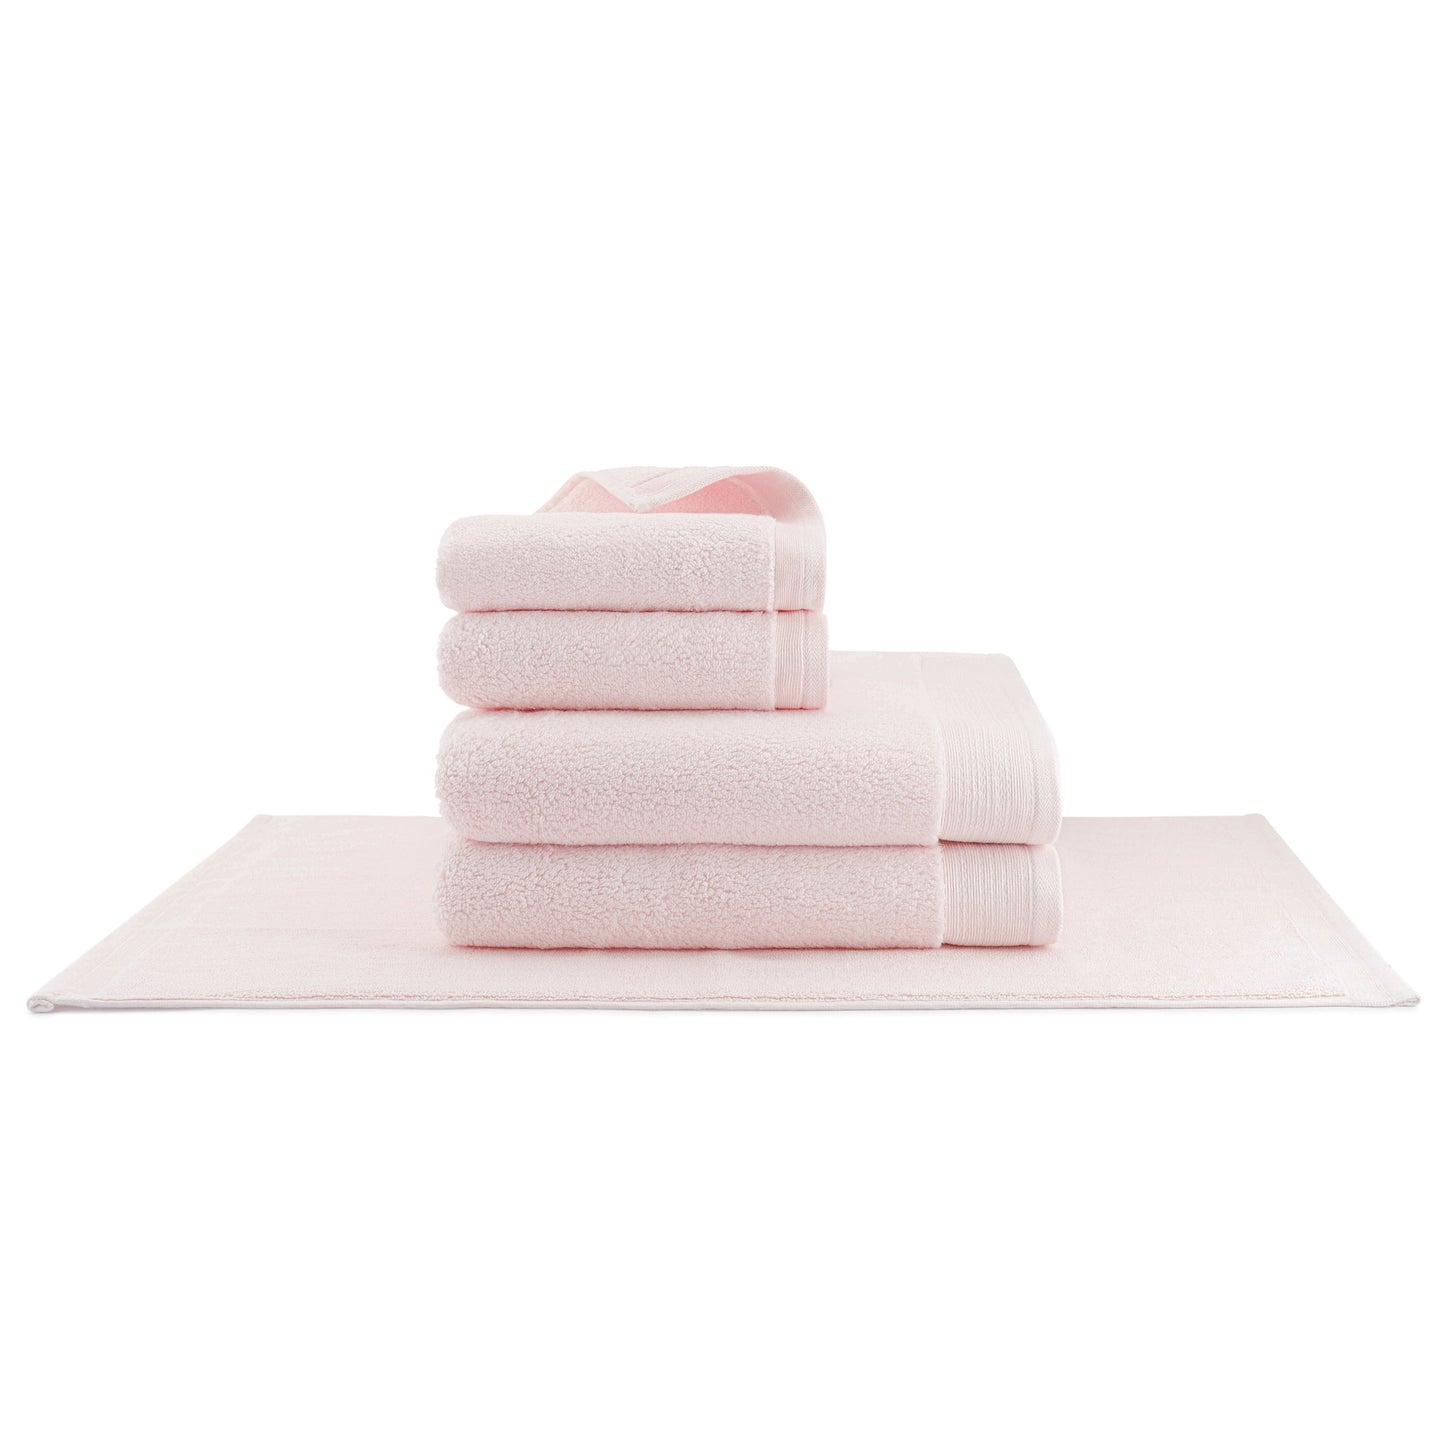 Egyptian Cotton 5 Piece Luxury Serenity Palace Classic Large Towel Set - Blush Pink